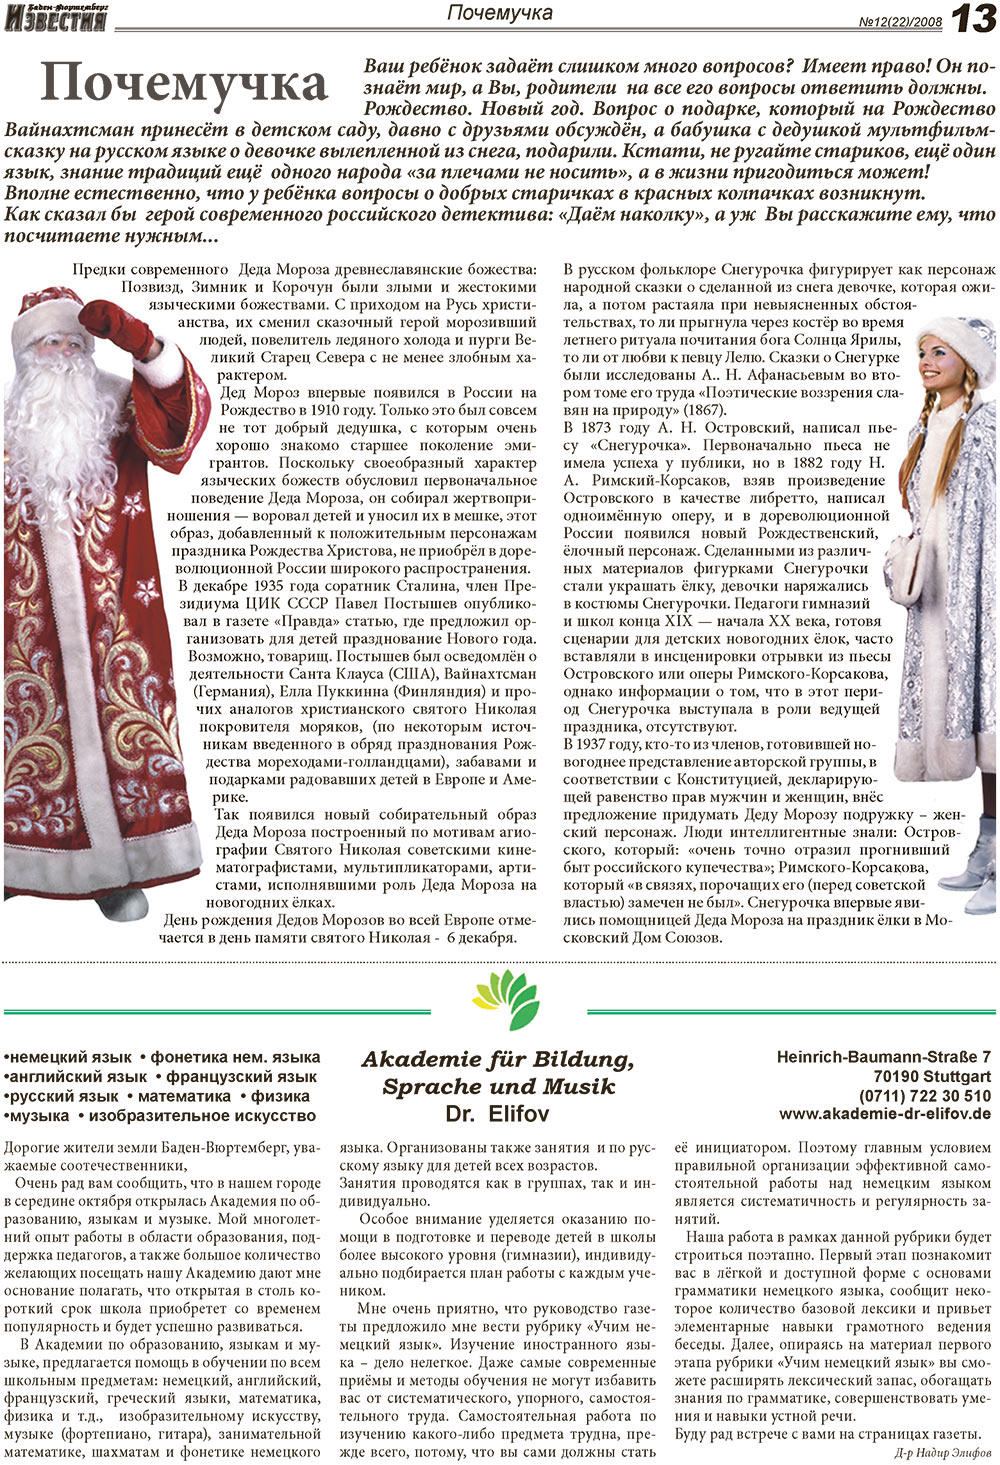 Известия BW (газета). 2008 год, номер 12, стр. 13